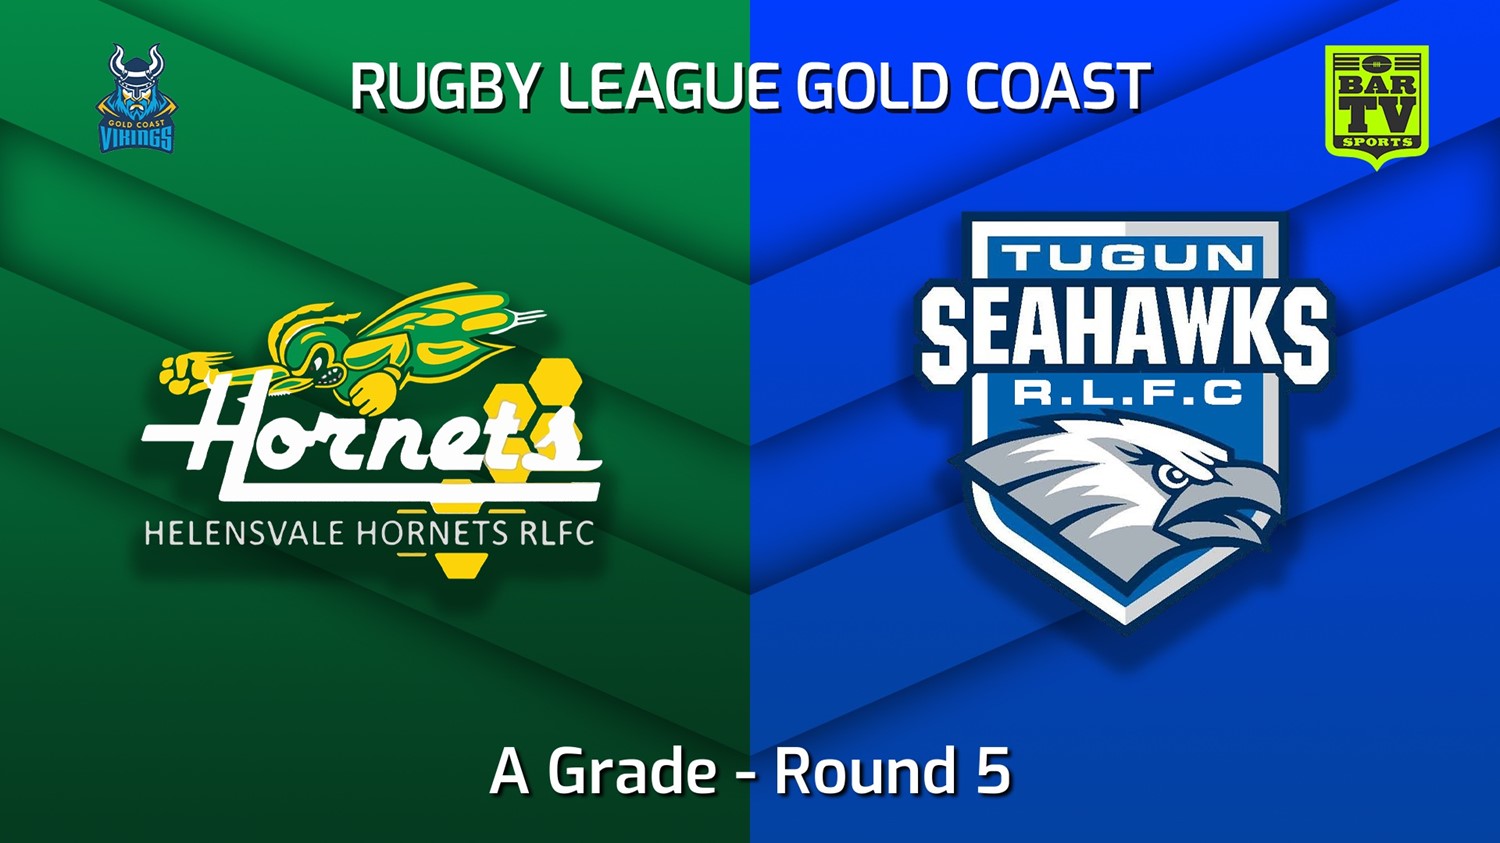 220508-Gold Coast Round 5 - A Grade - Helensvale Hornets v Tugun Seahawks Slate Image